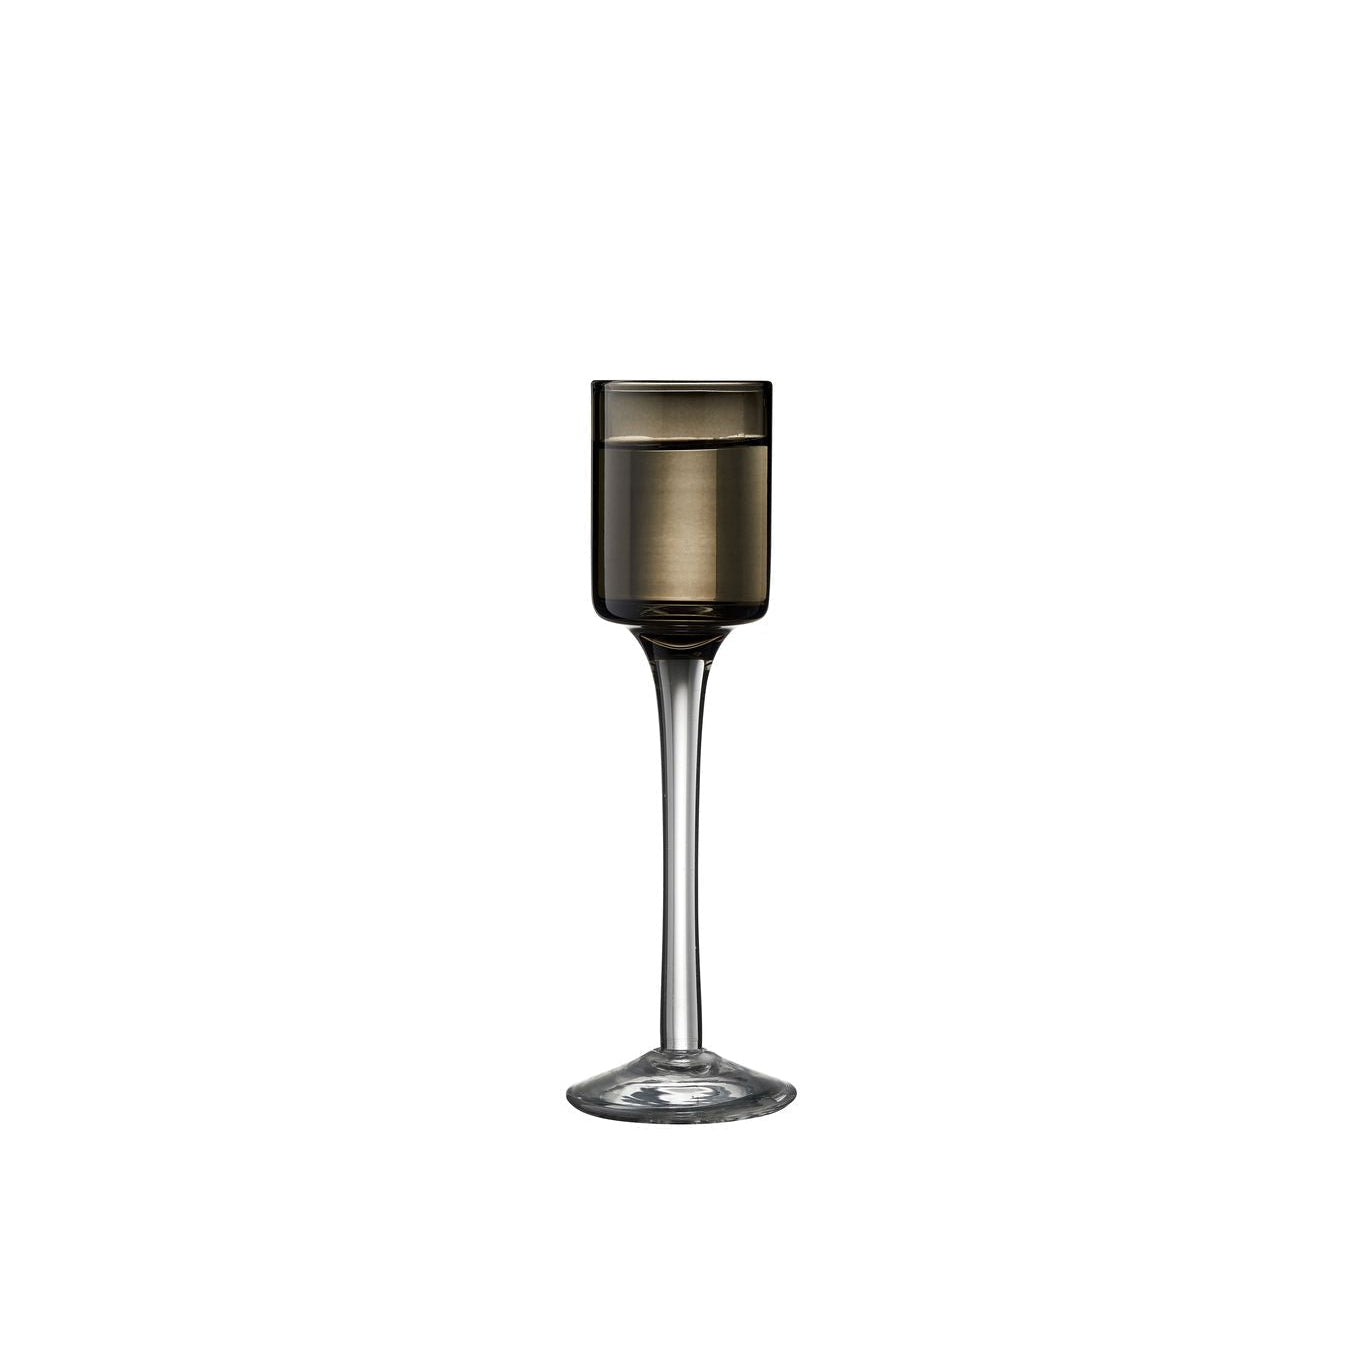 Lyngby Glas Schnapps Glass -valikoimat värit, 6 kpl.